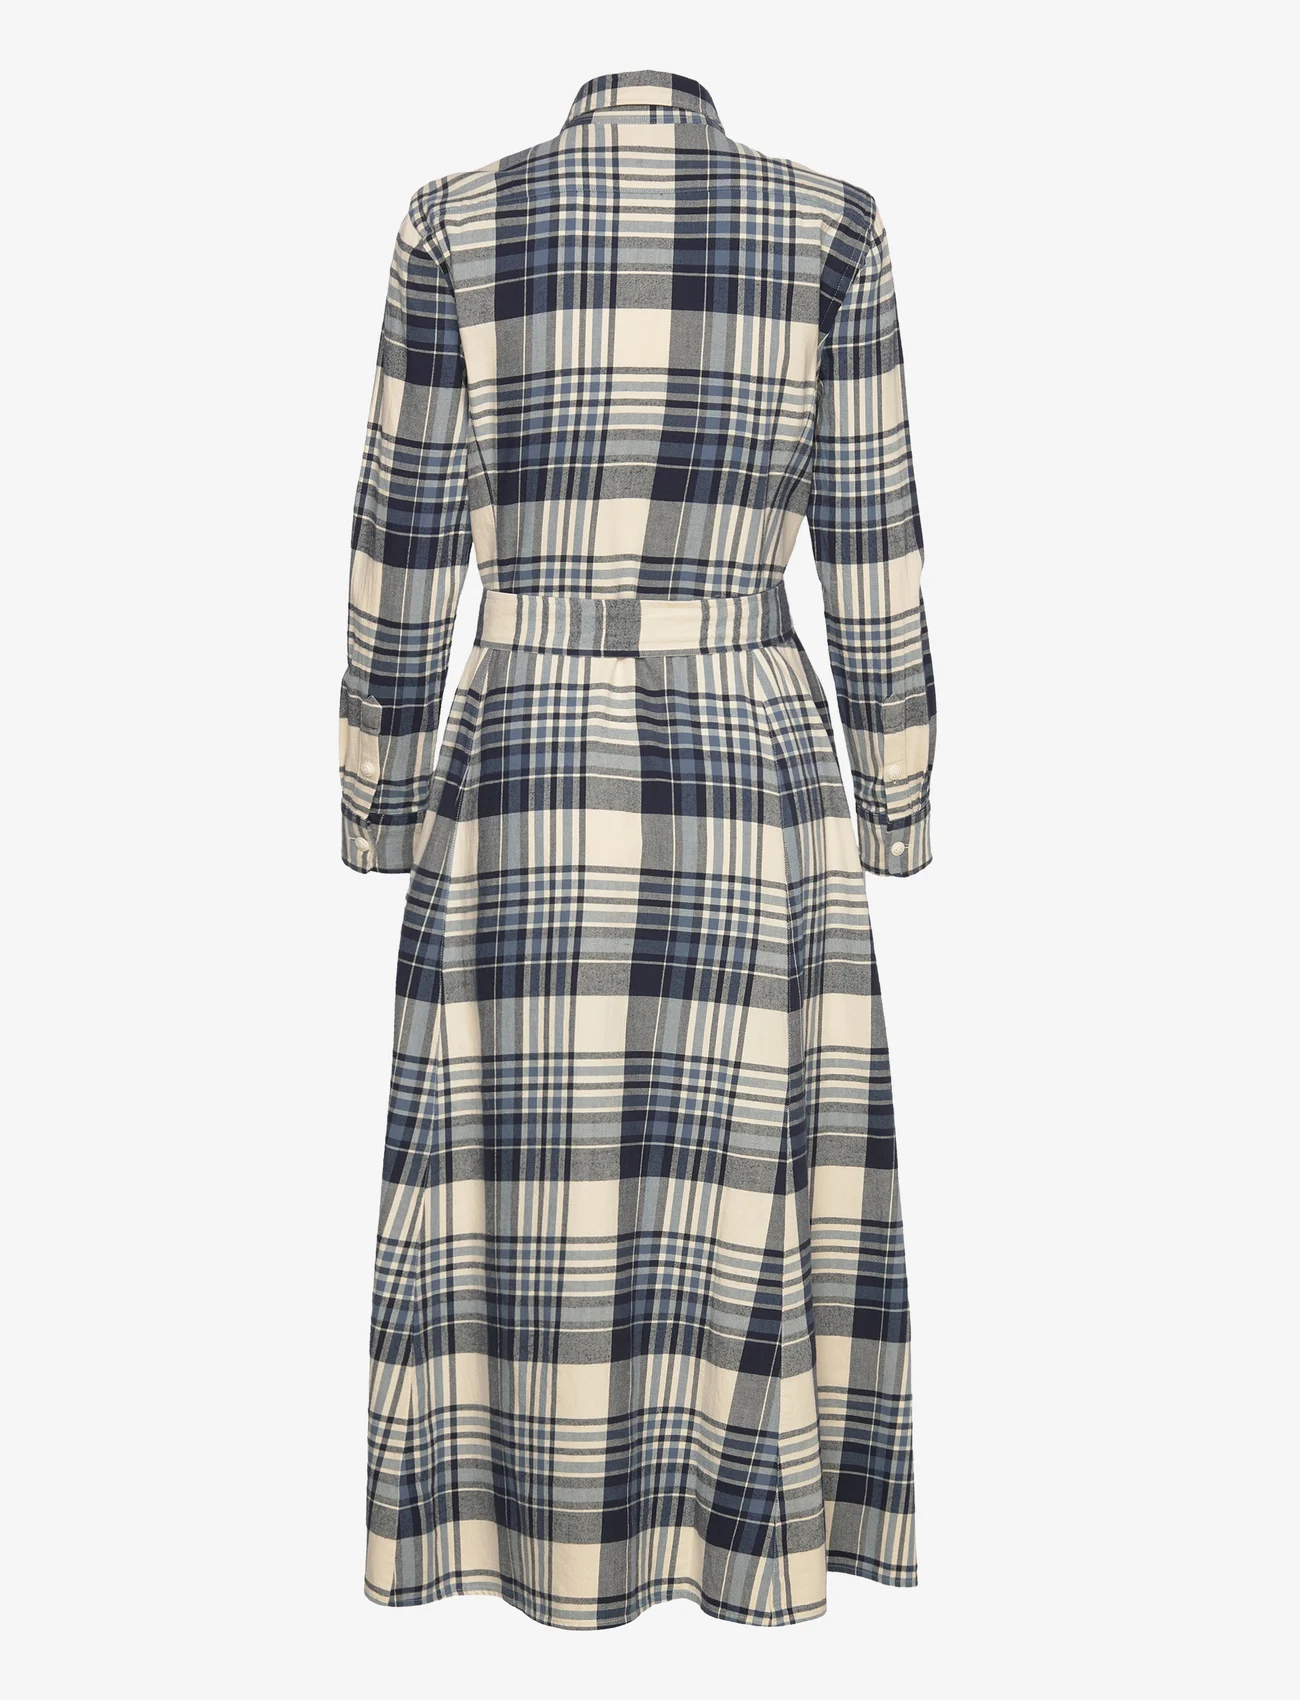 Polo Ralph Lauren - Plaid Cotton Twill Shirtdress - vasarinės suknelės - 1494 cream/nvy/bl - 1